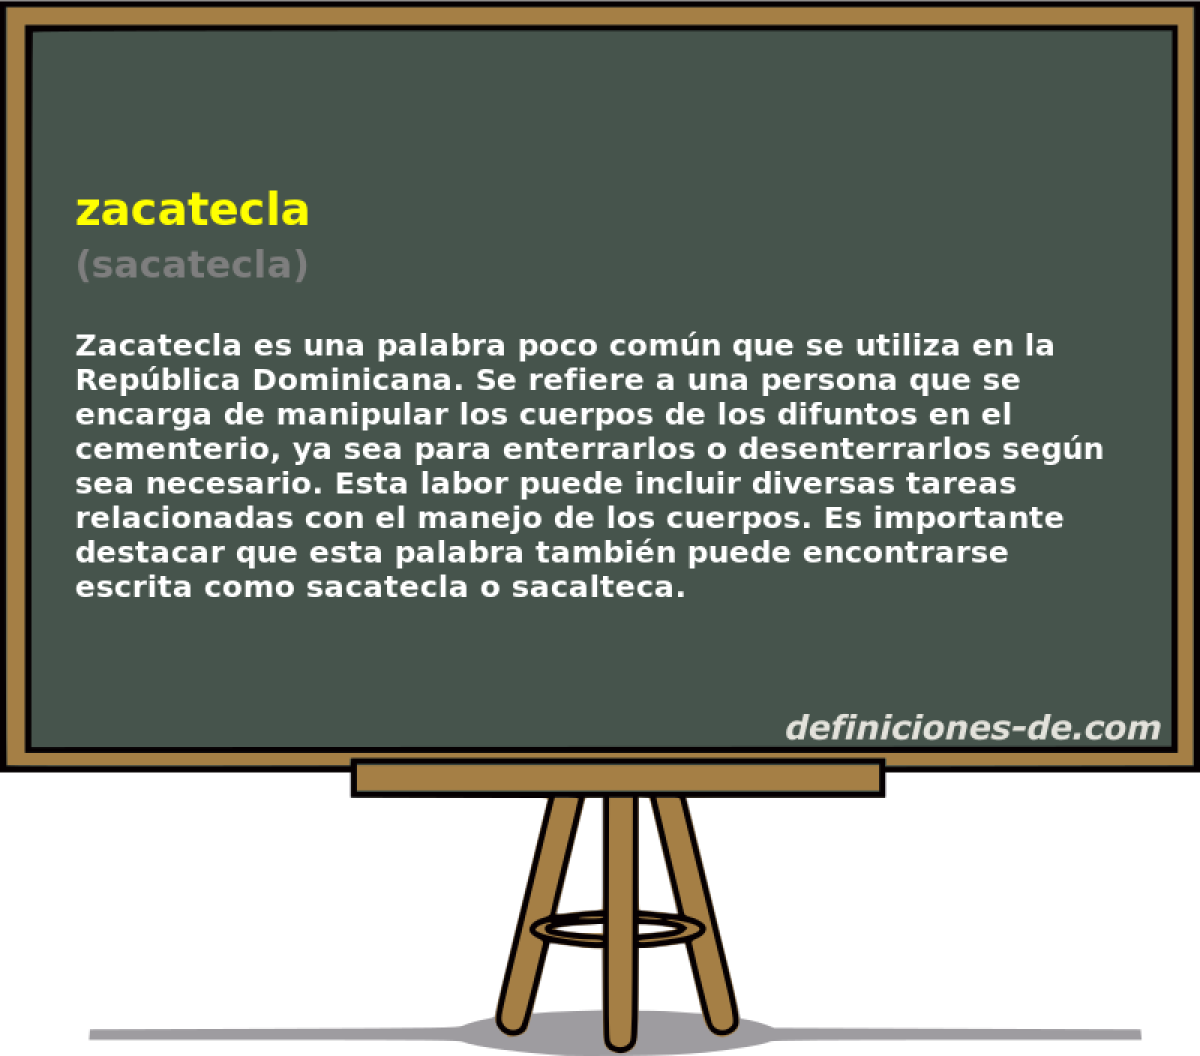 zacatecla (sacatecla)